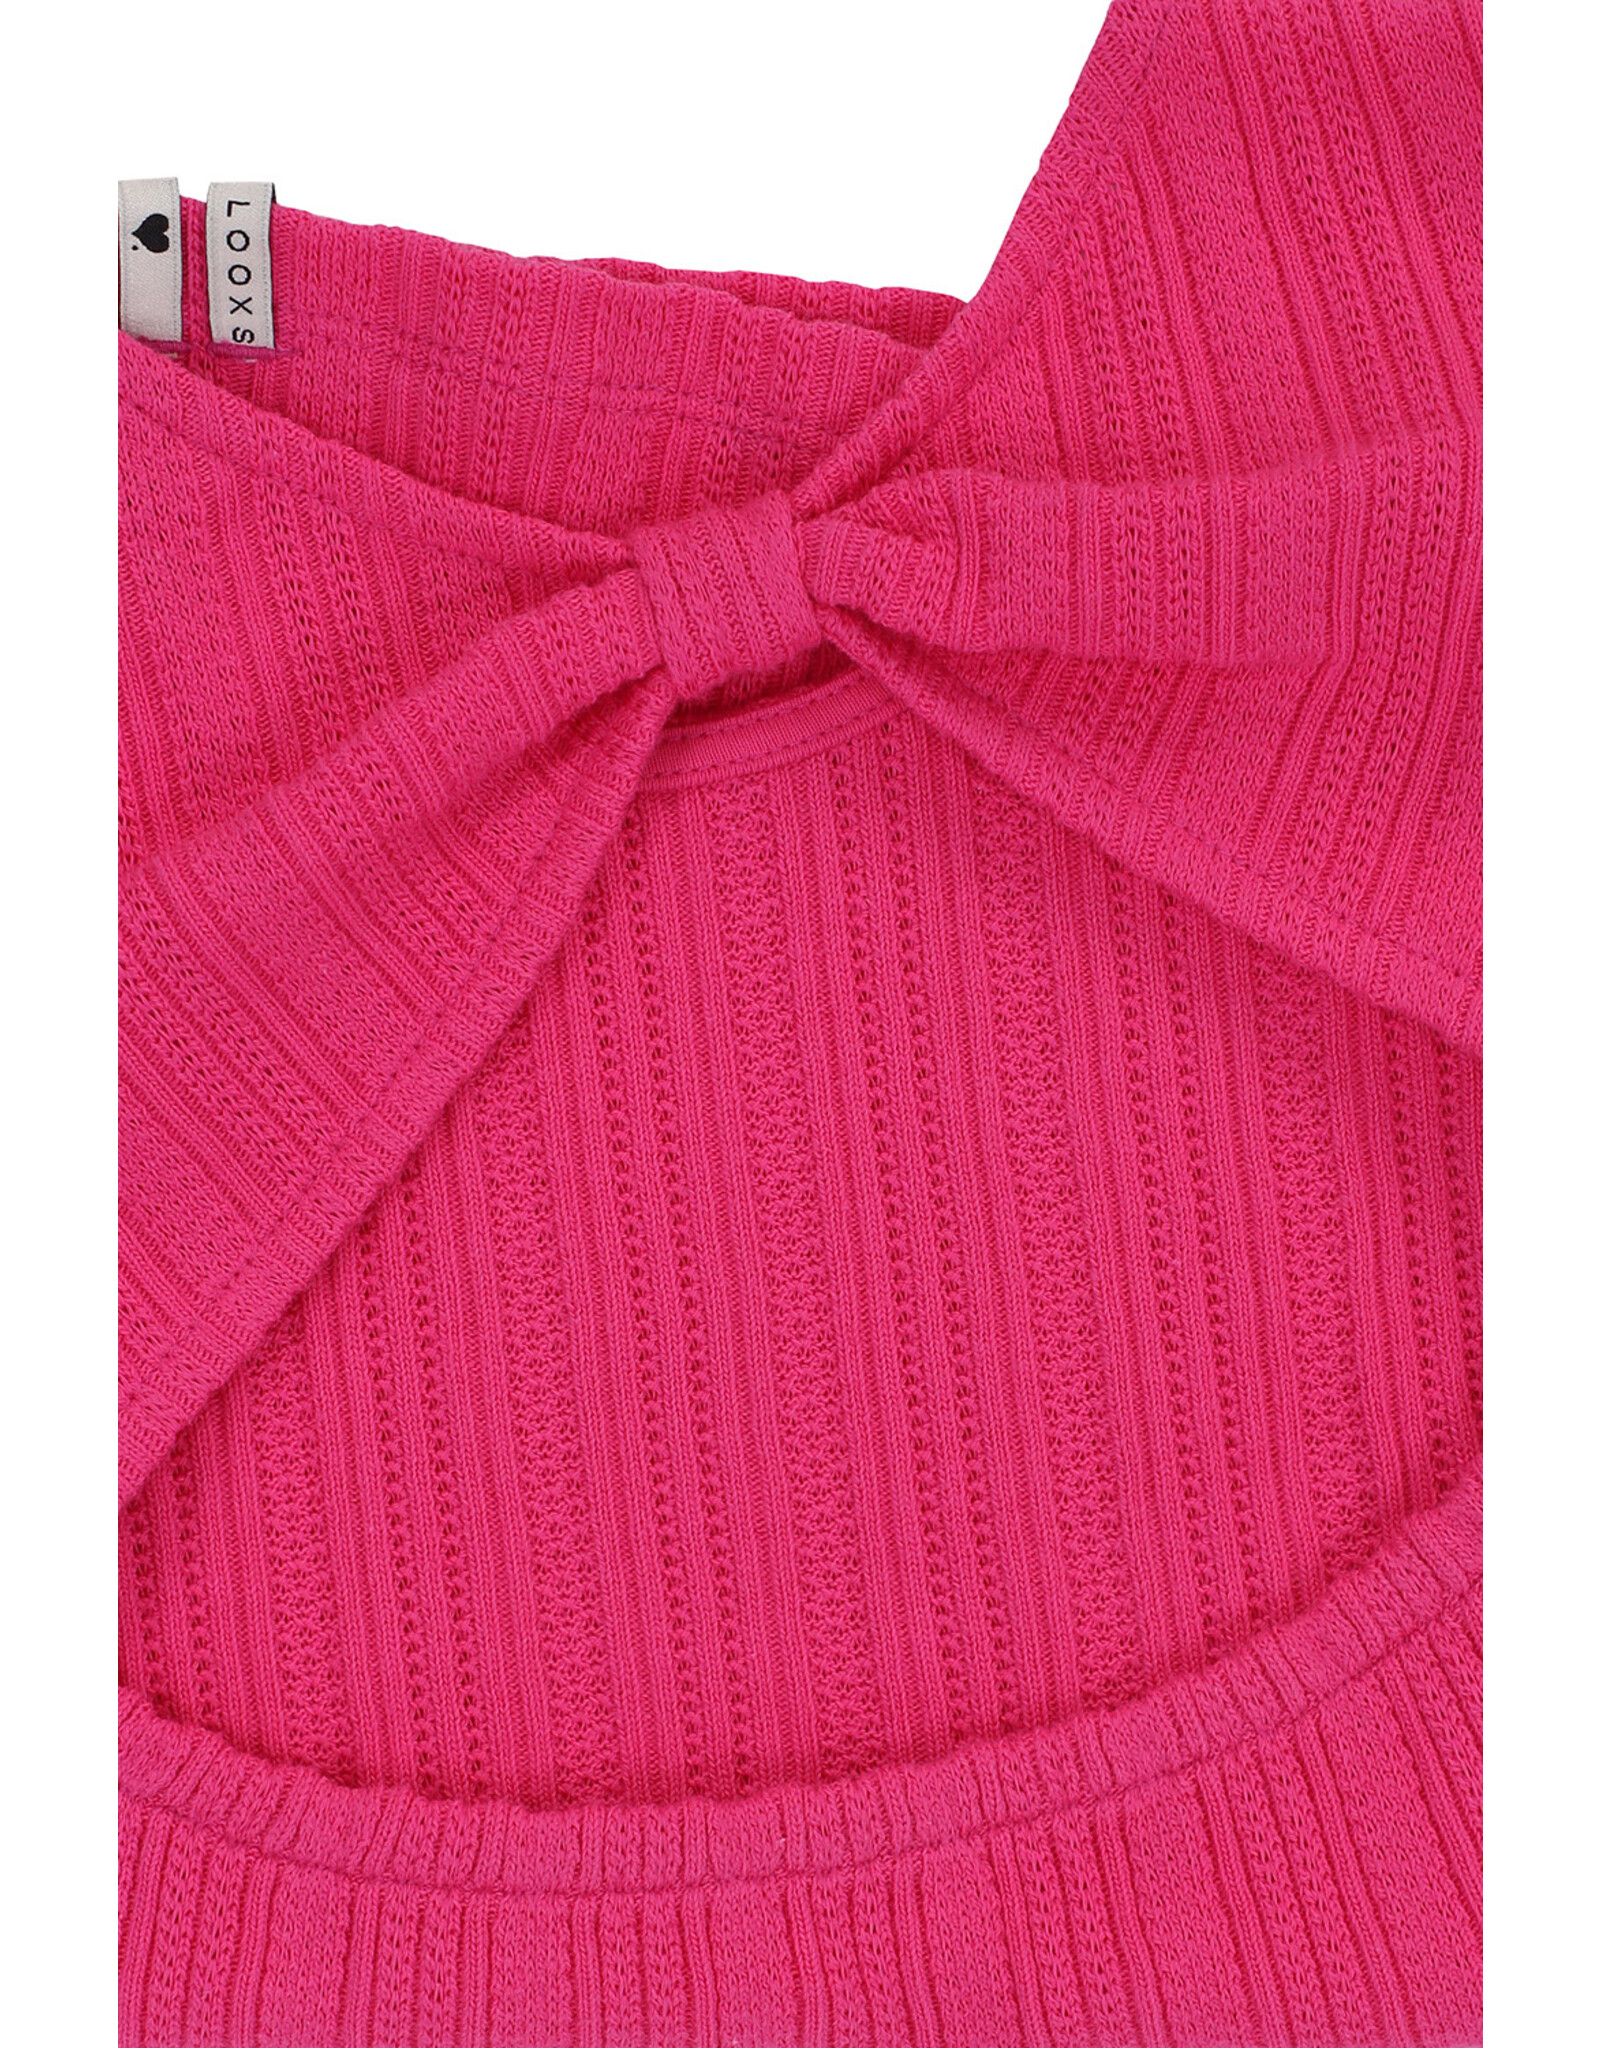 LOOXS Little 4-tshirts Little fancy knit top warm fuchsia